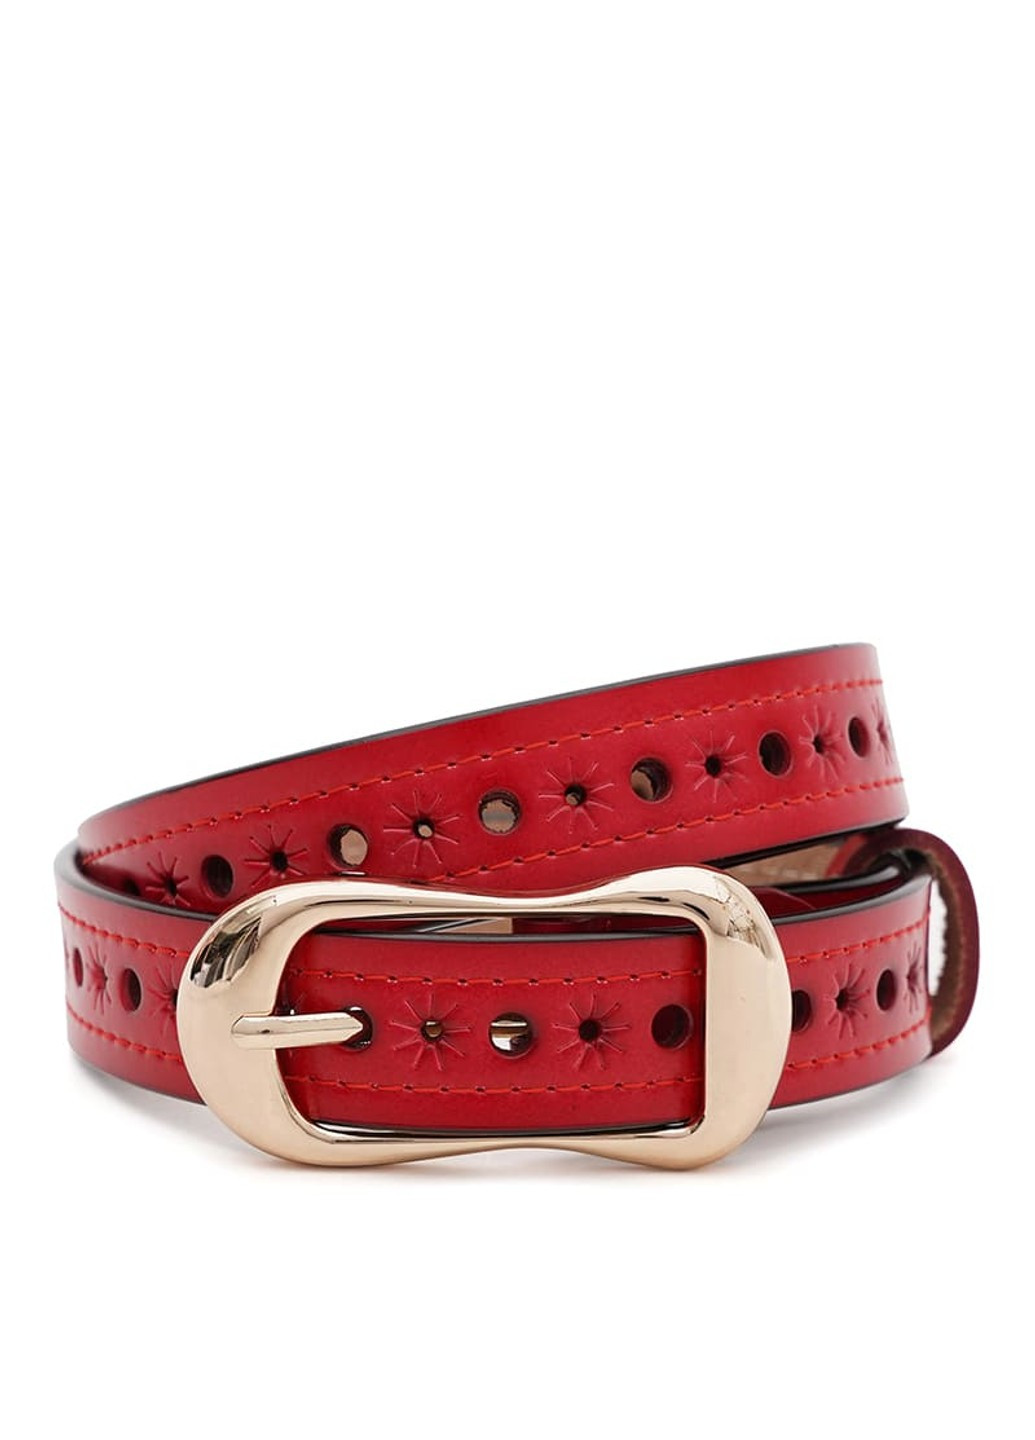 Женский кожаный ремень CV1ZK-019r-red Borsa Leather (266143301)